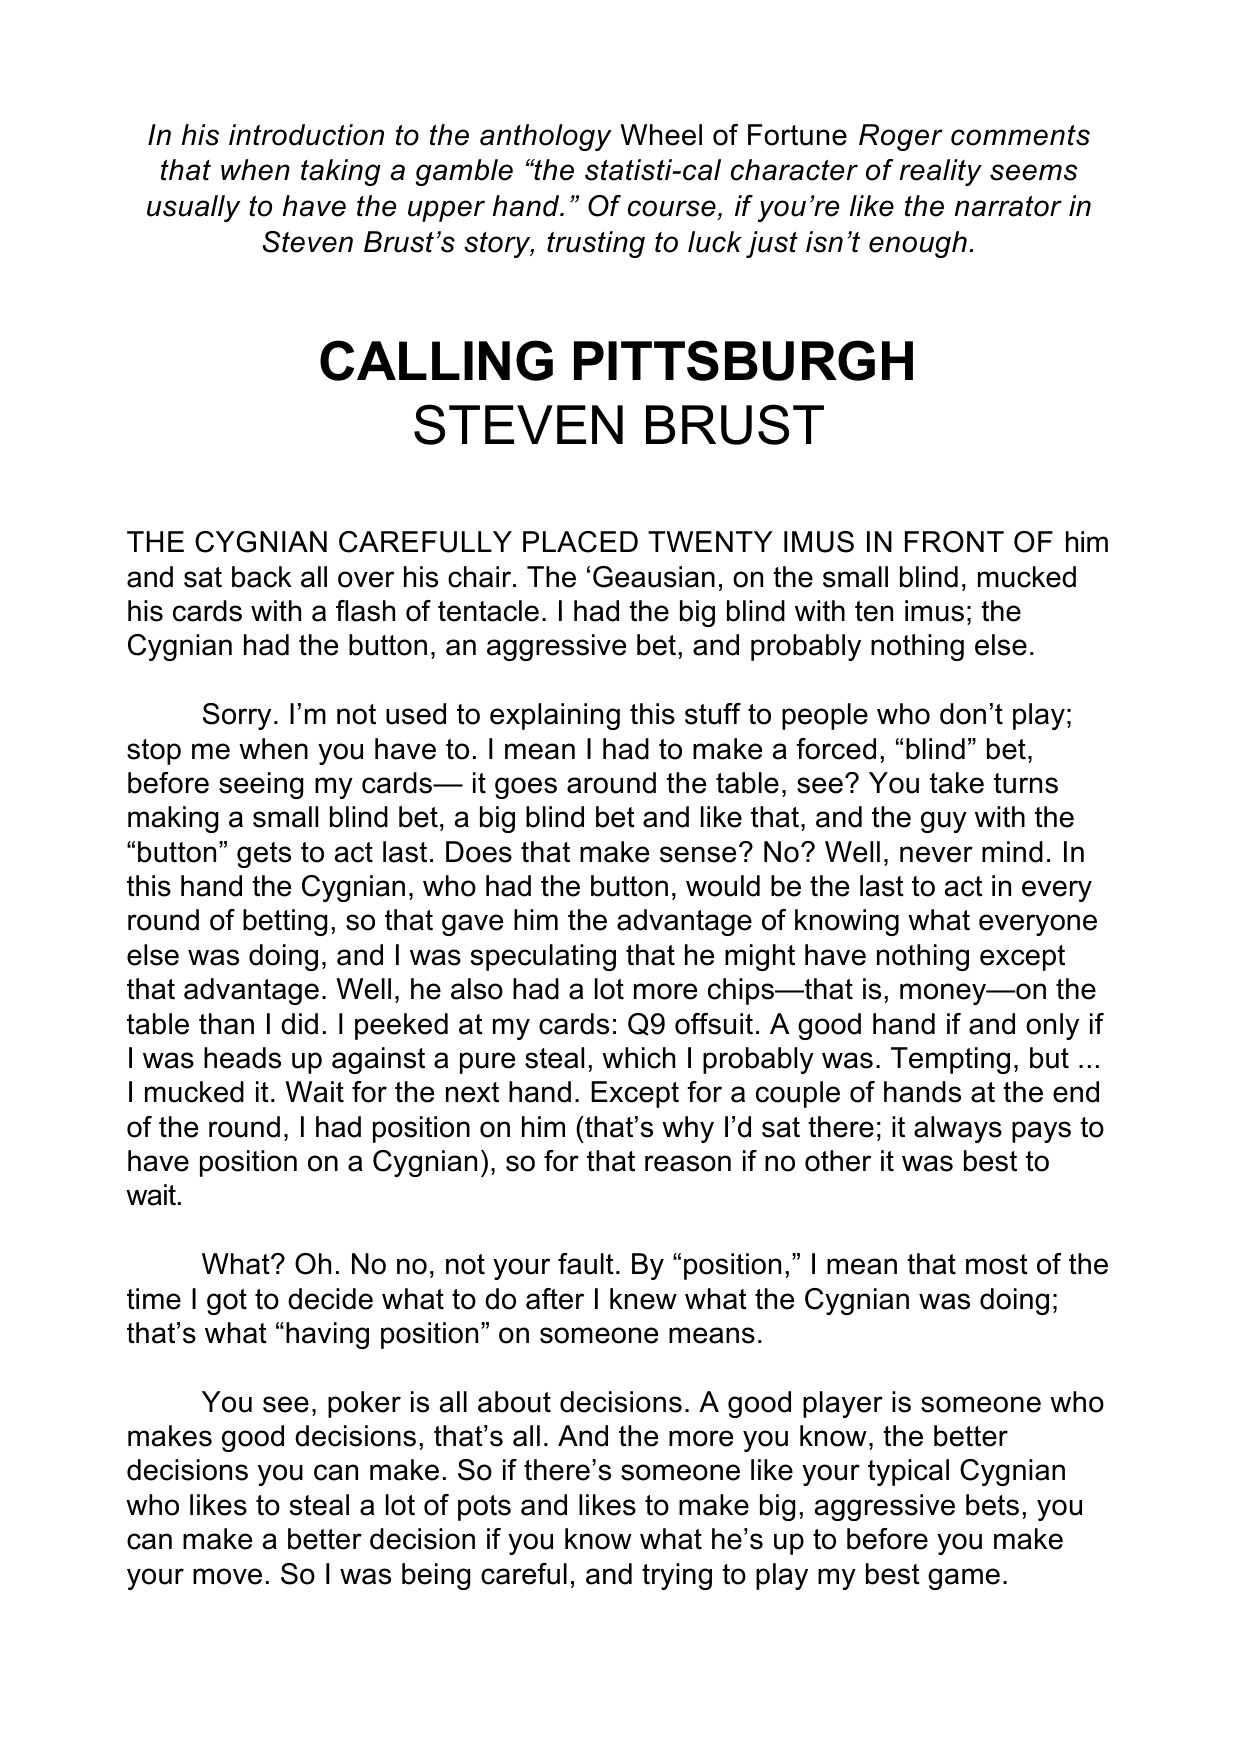 Calling Pittsburgh